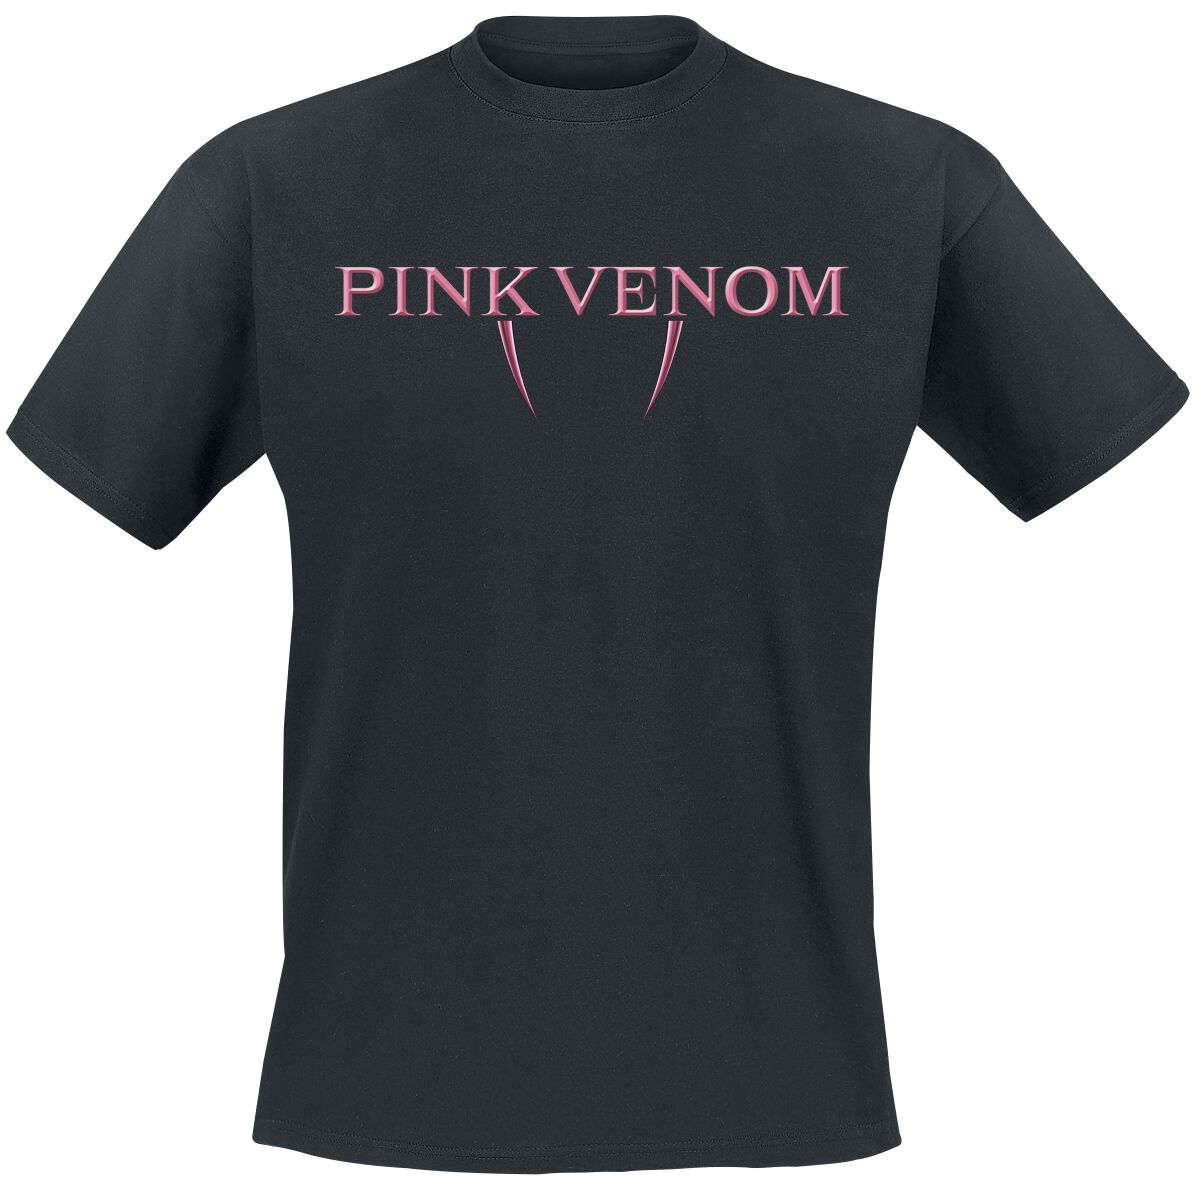 Blackpink Pink Venom Fangs T-Shirt schwarz in XL